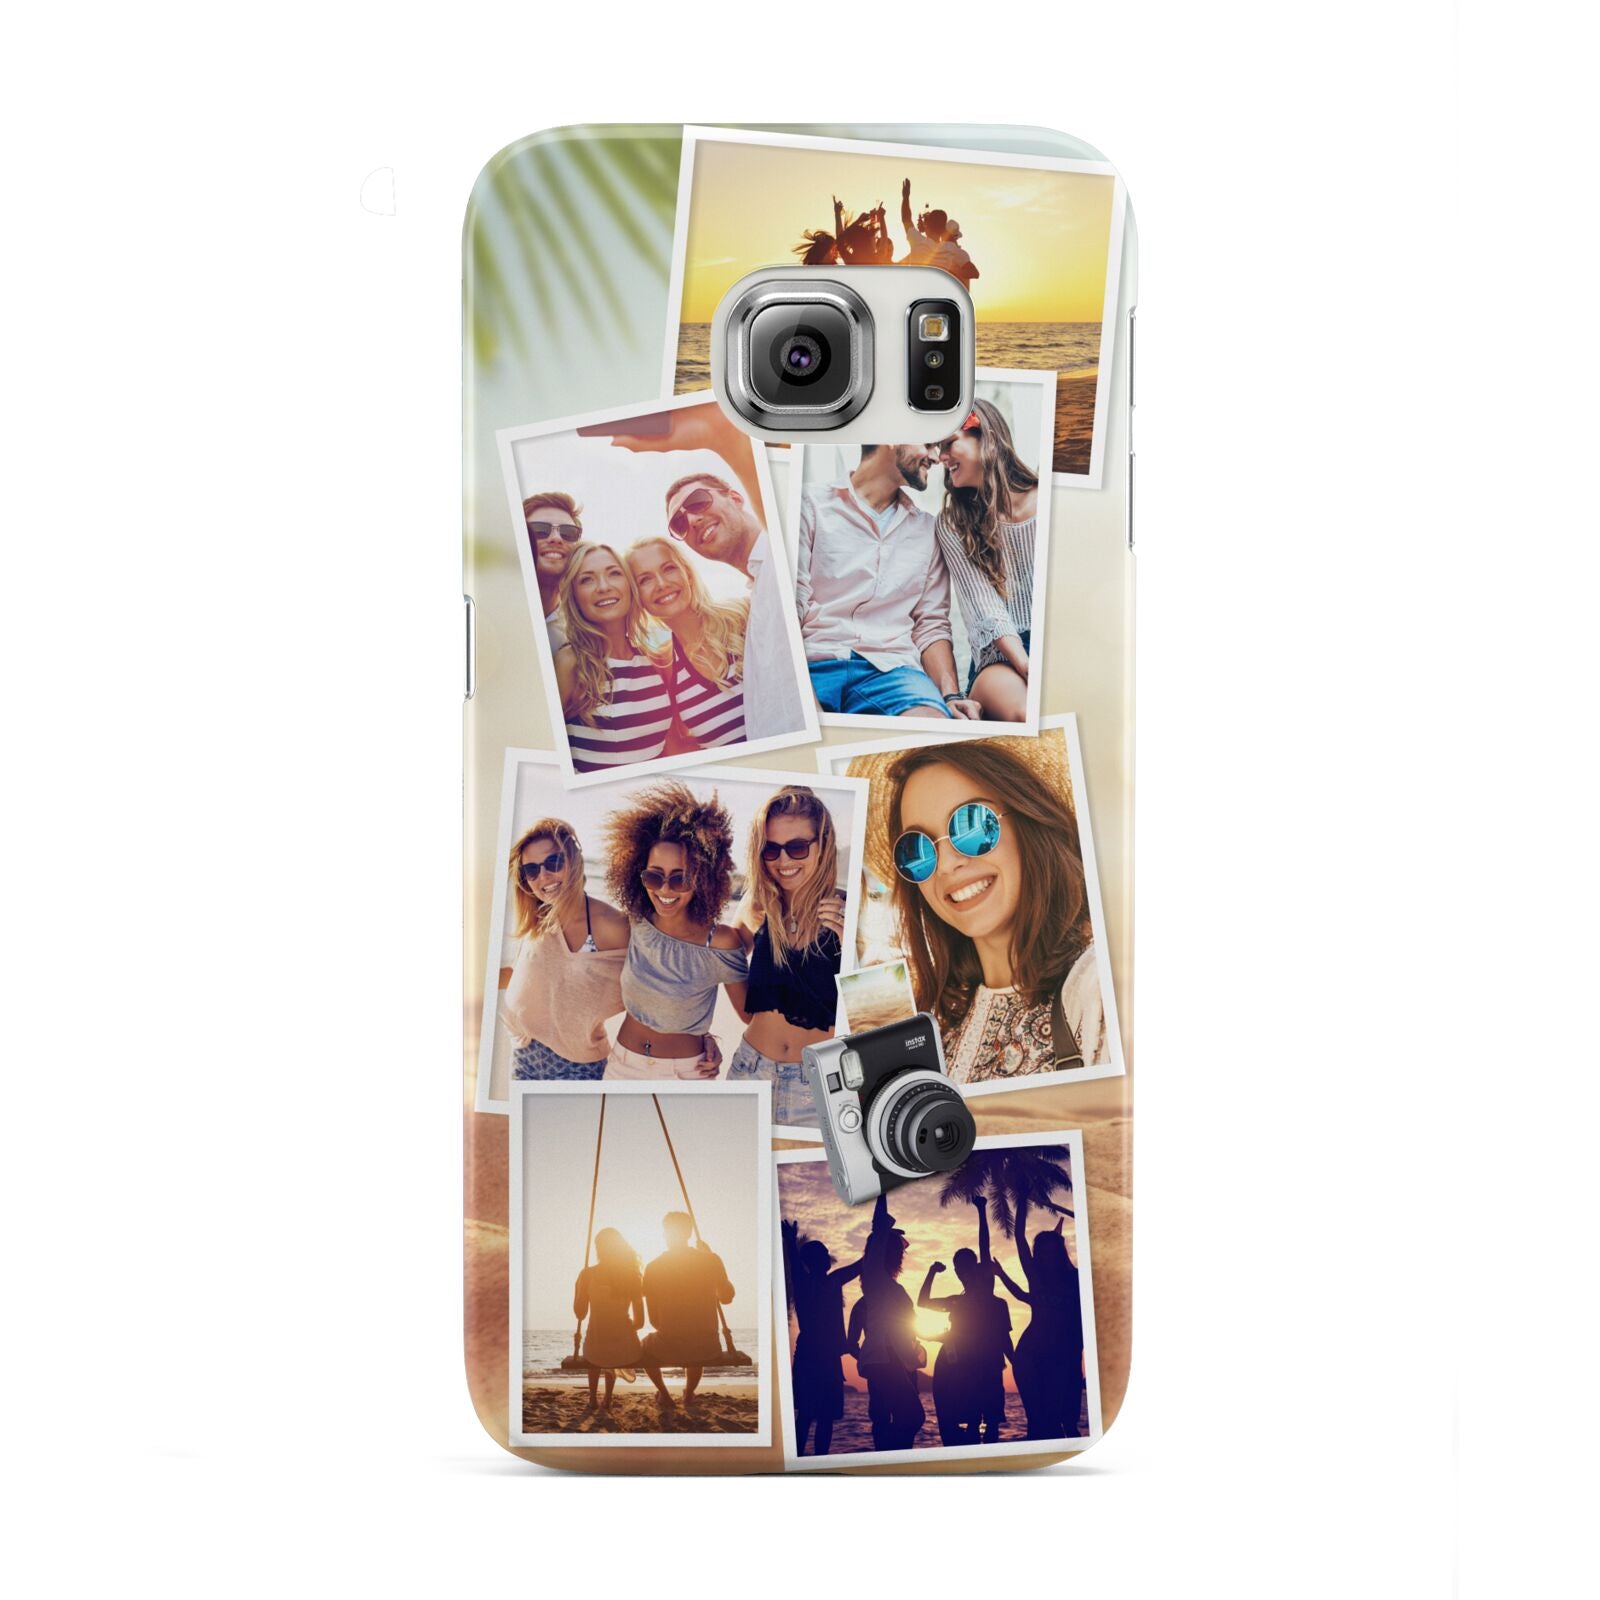 Personalised Summer Holiday Photos Samsung Galaxy S6 Edge Case